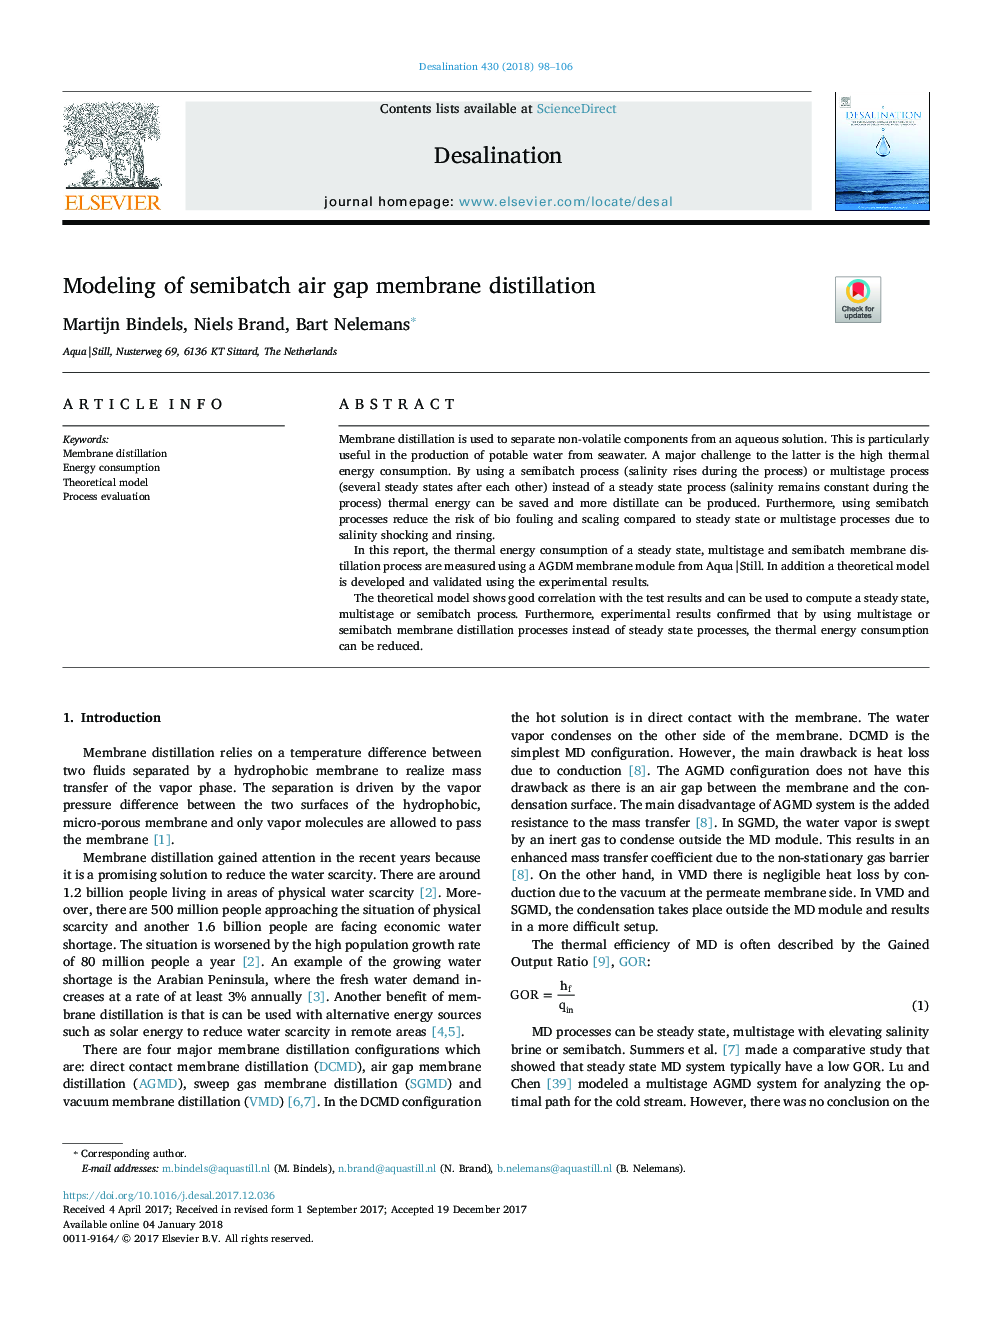 Modeling of semibatch air gap membrane distillation